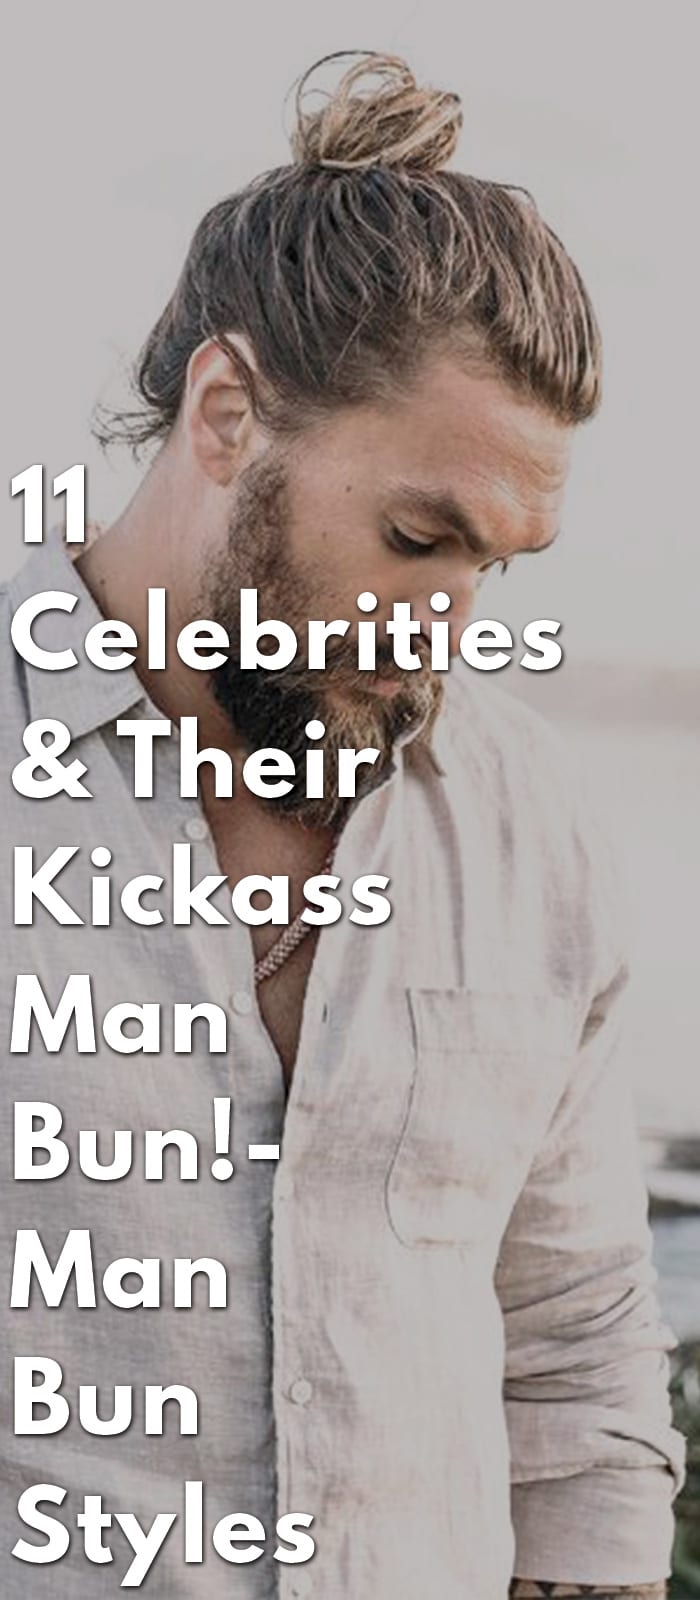 11-Celebrities-&-Their-Kickass-Man-Bun!-Man-Bun-Styles